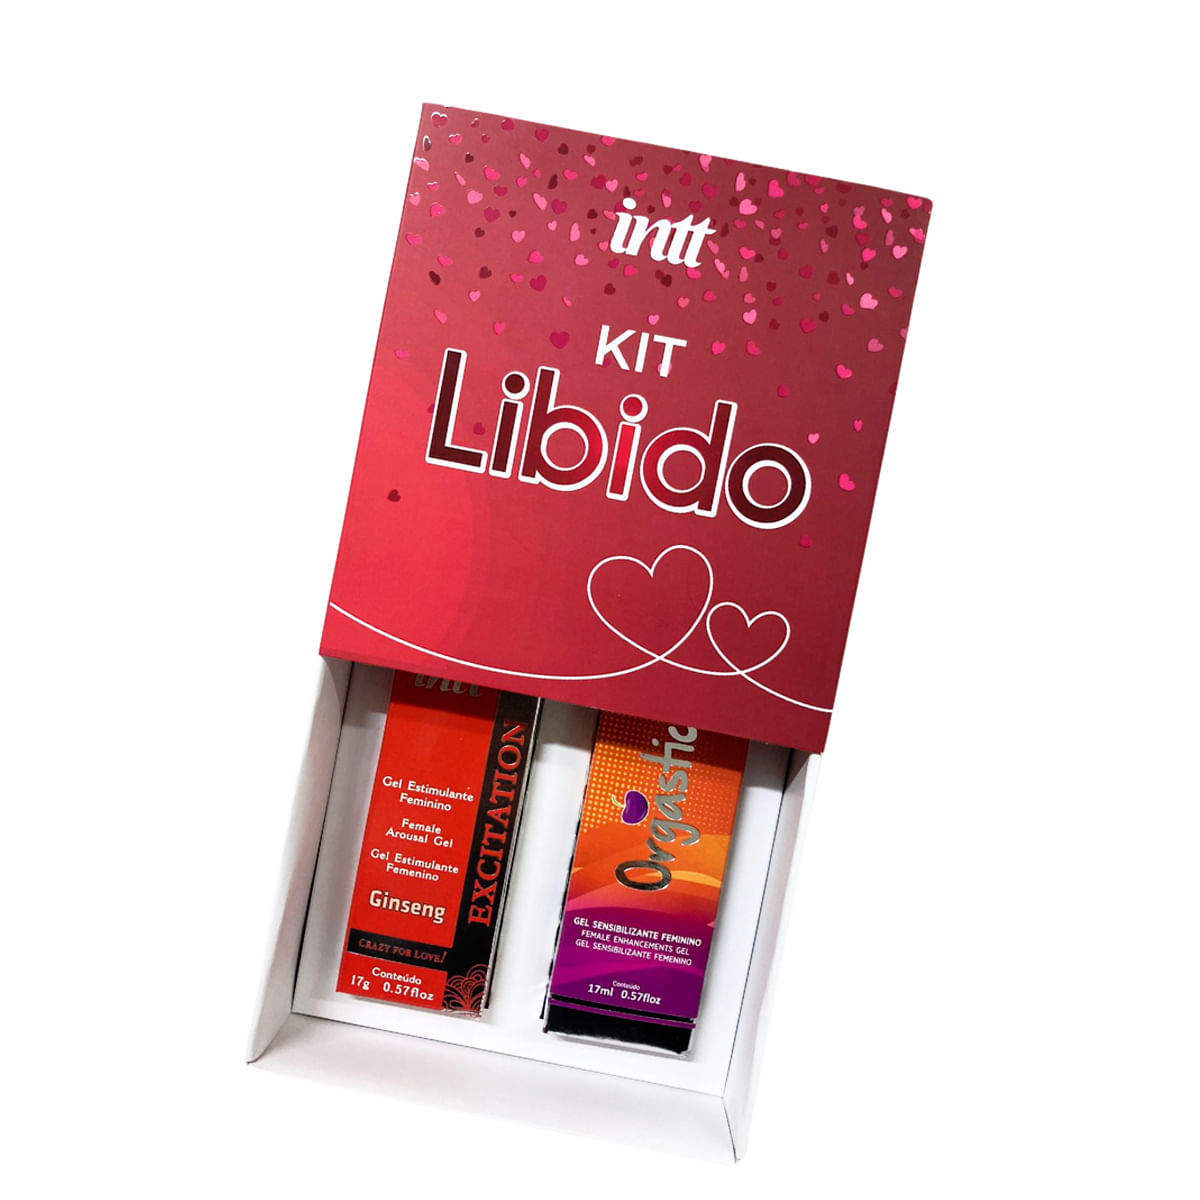 Kit Libido com 1 Excitation 17 ml e 1 Orgastic Intt